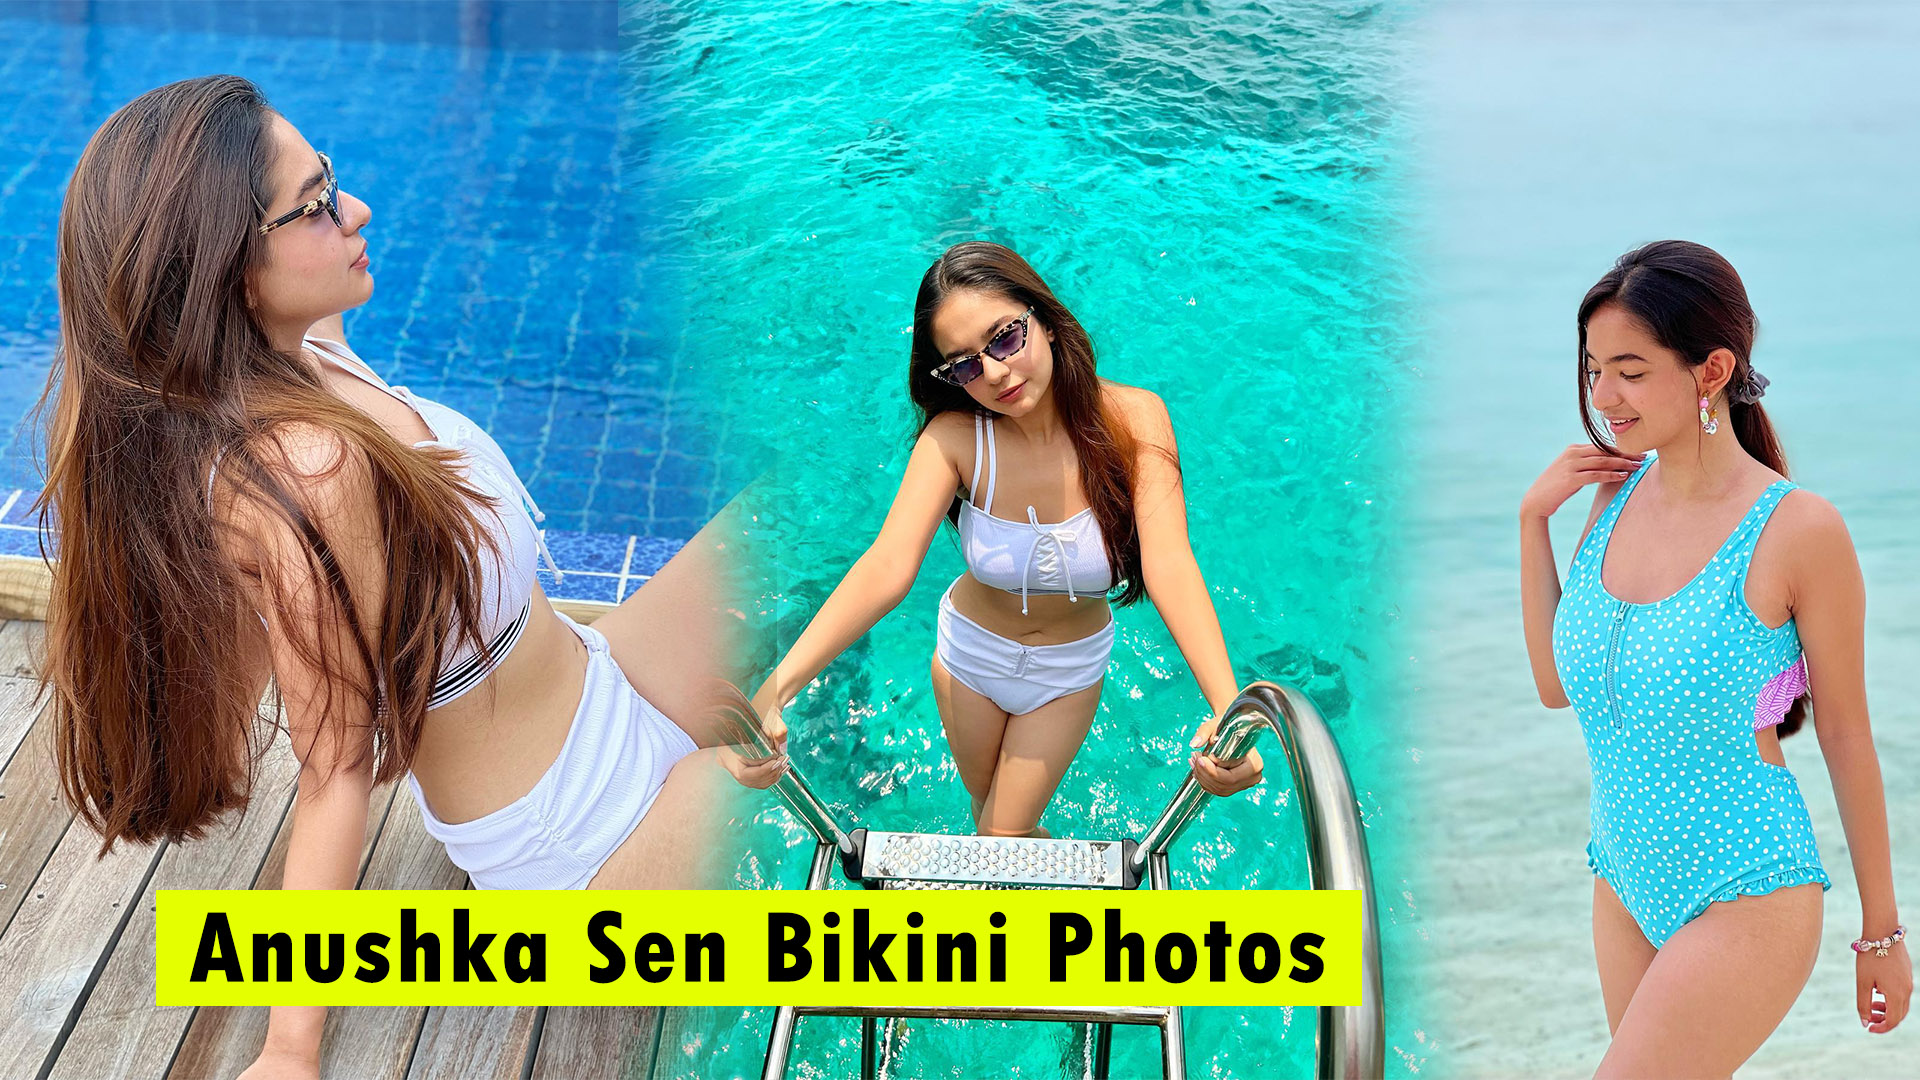 Anushka sen bikini photos